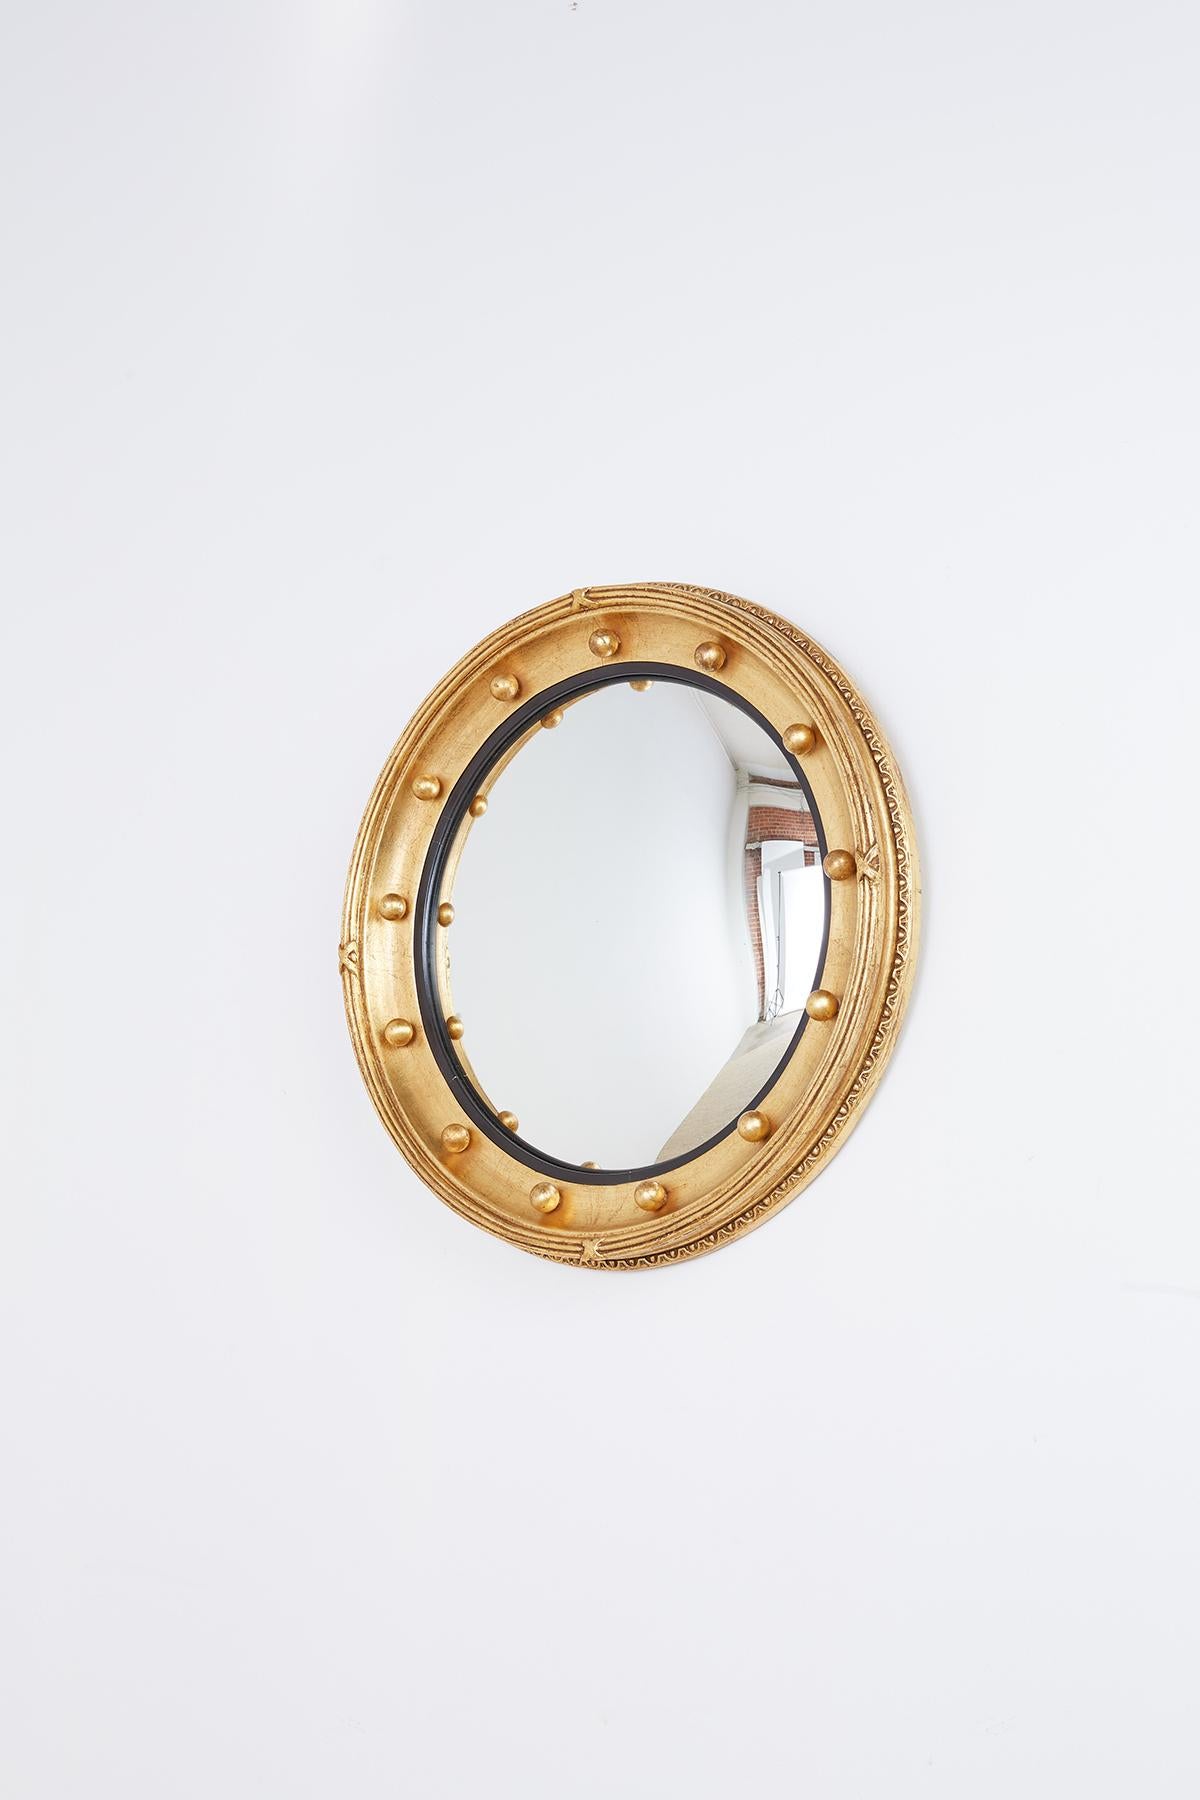 English Regency Style Round Convex Bullseye Mirror 2